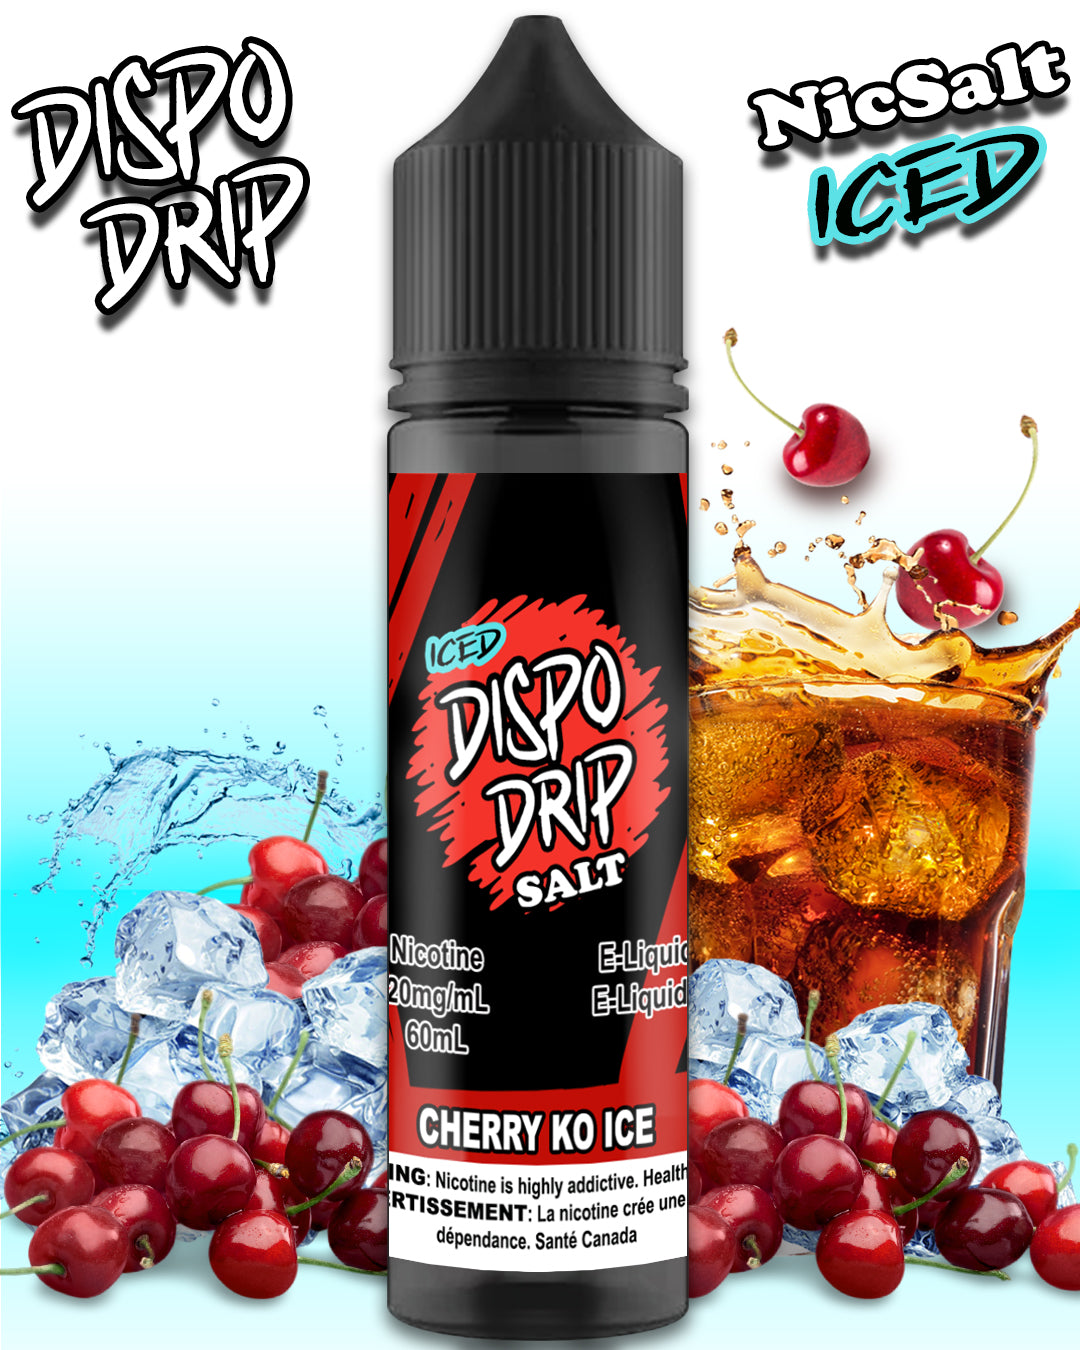 DISPO DRIP ICED - CHERRY KO ICE SALT